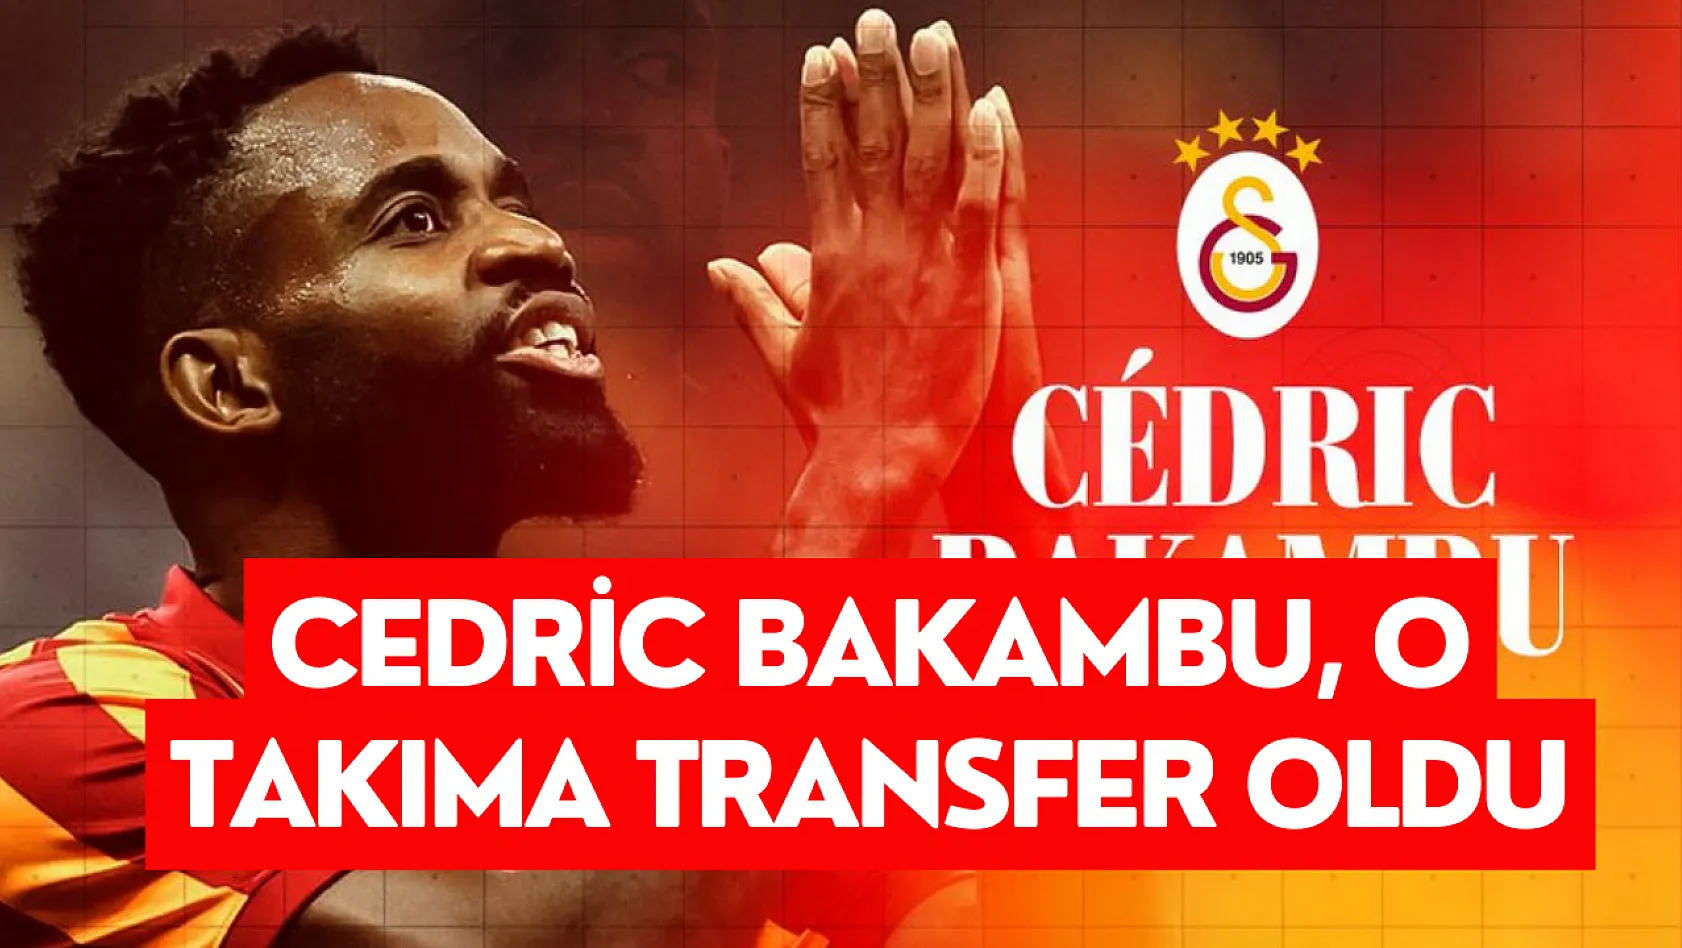 Cedric Bakambu, o takıma transfer oldu